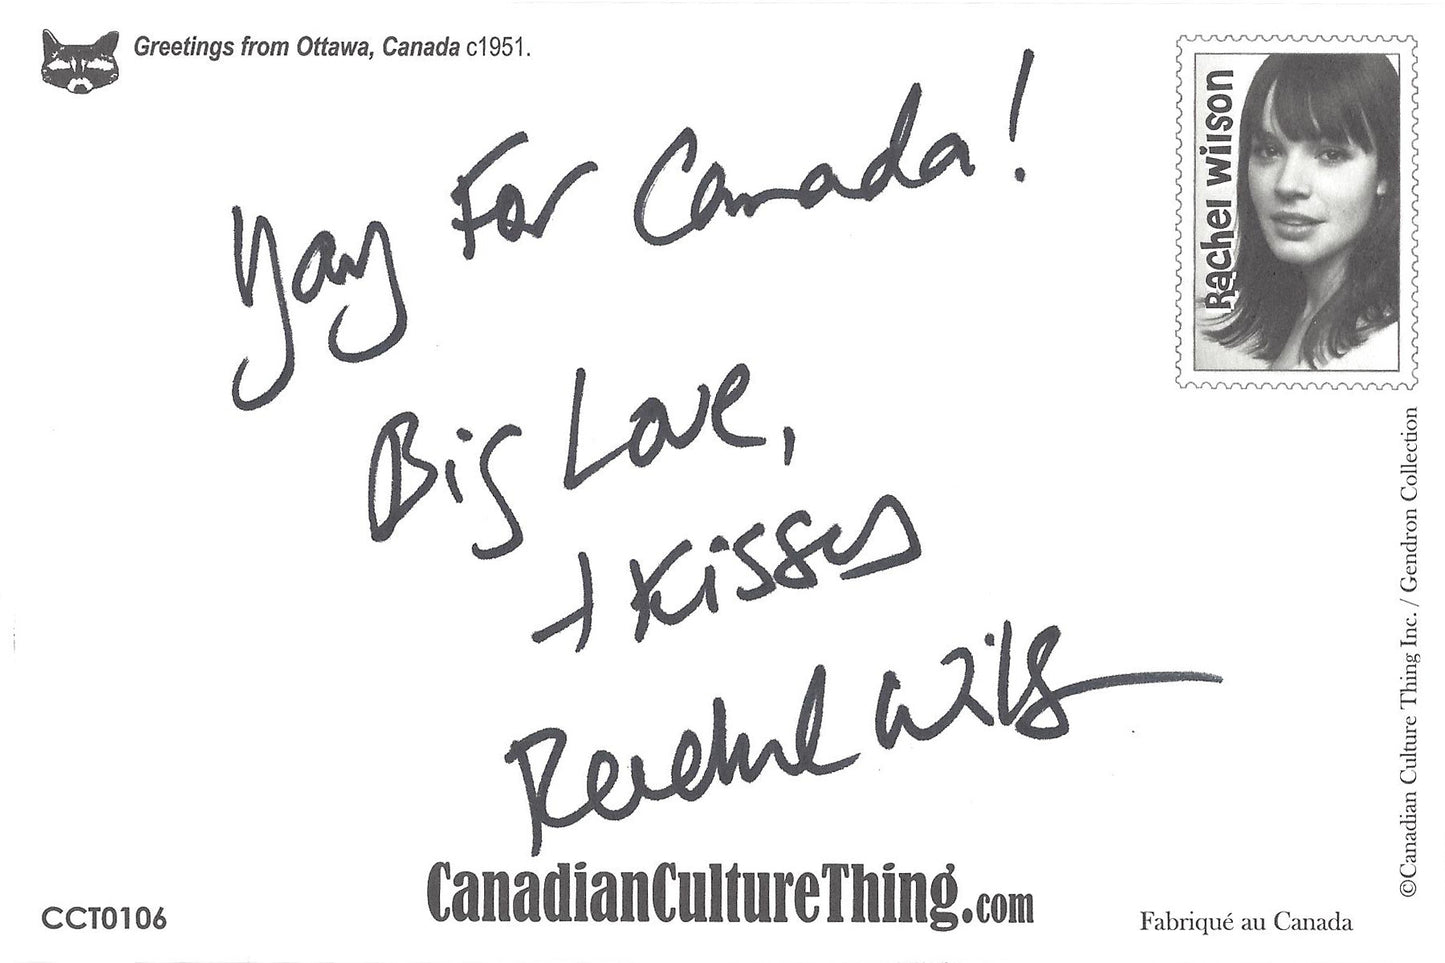 CCT0106 Greetings from Ottawa c1951 Postcard